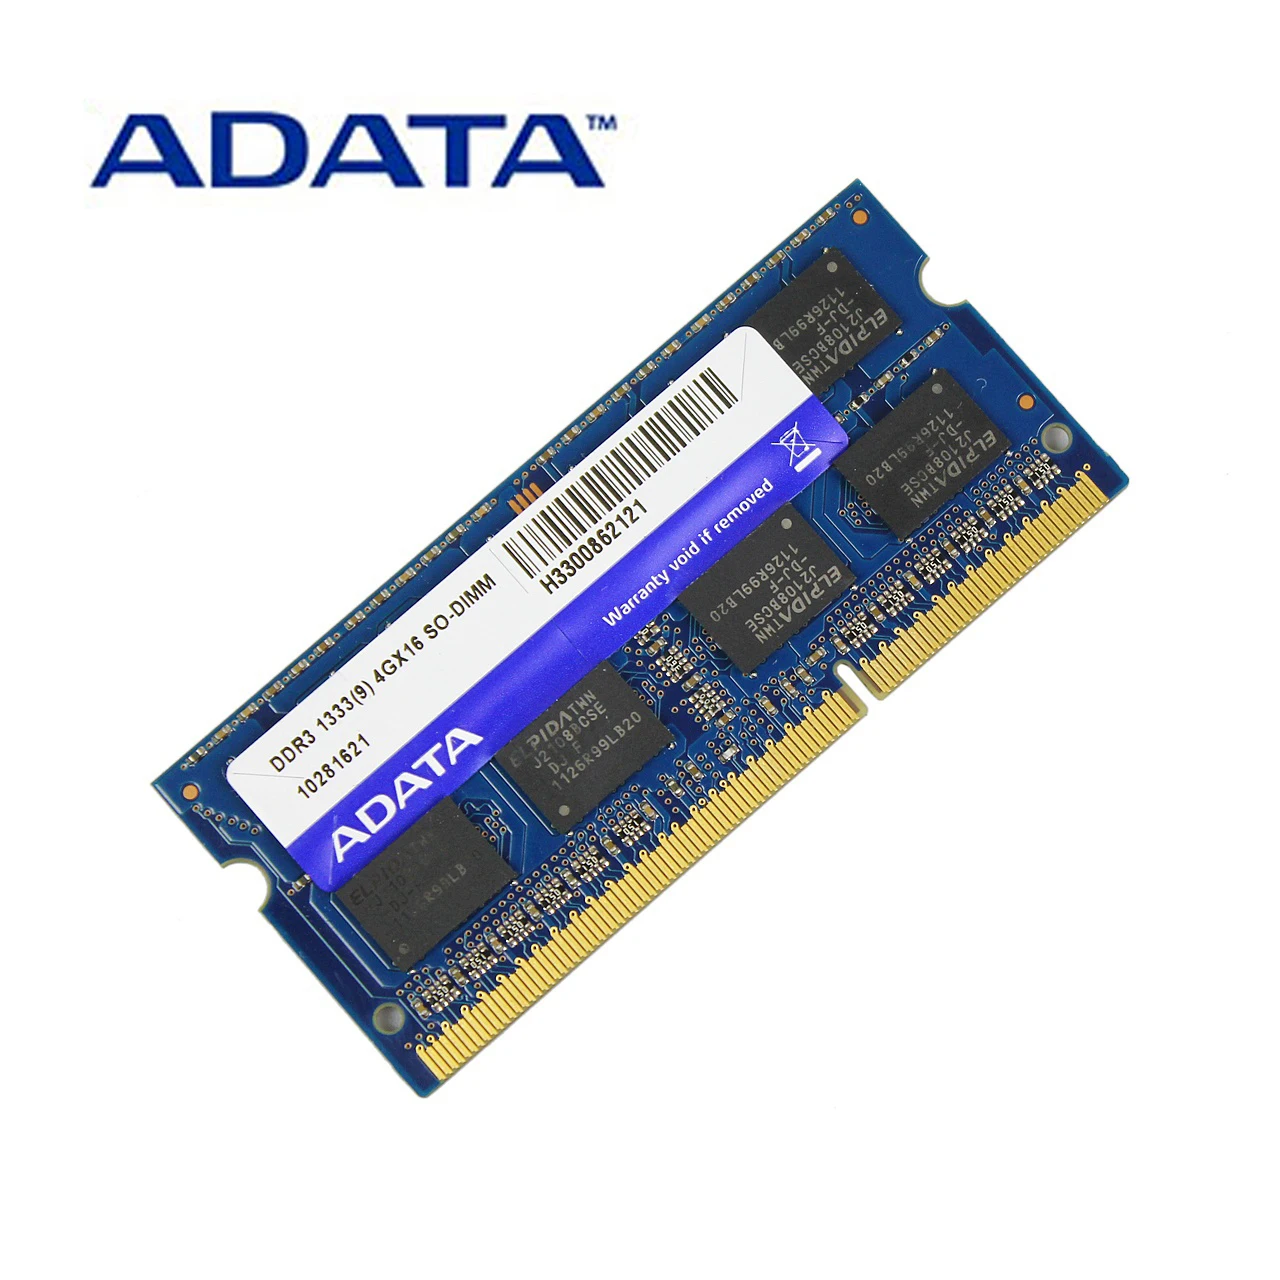 Adata-ddr3ram-1-5v-2gb-4gb-8gb-1333mhz-SO-DIMM-204-PC3-10600-lenovo